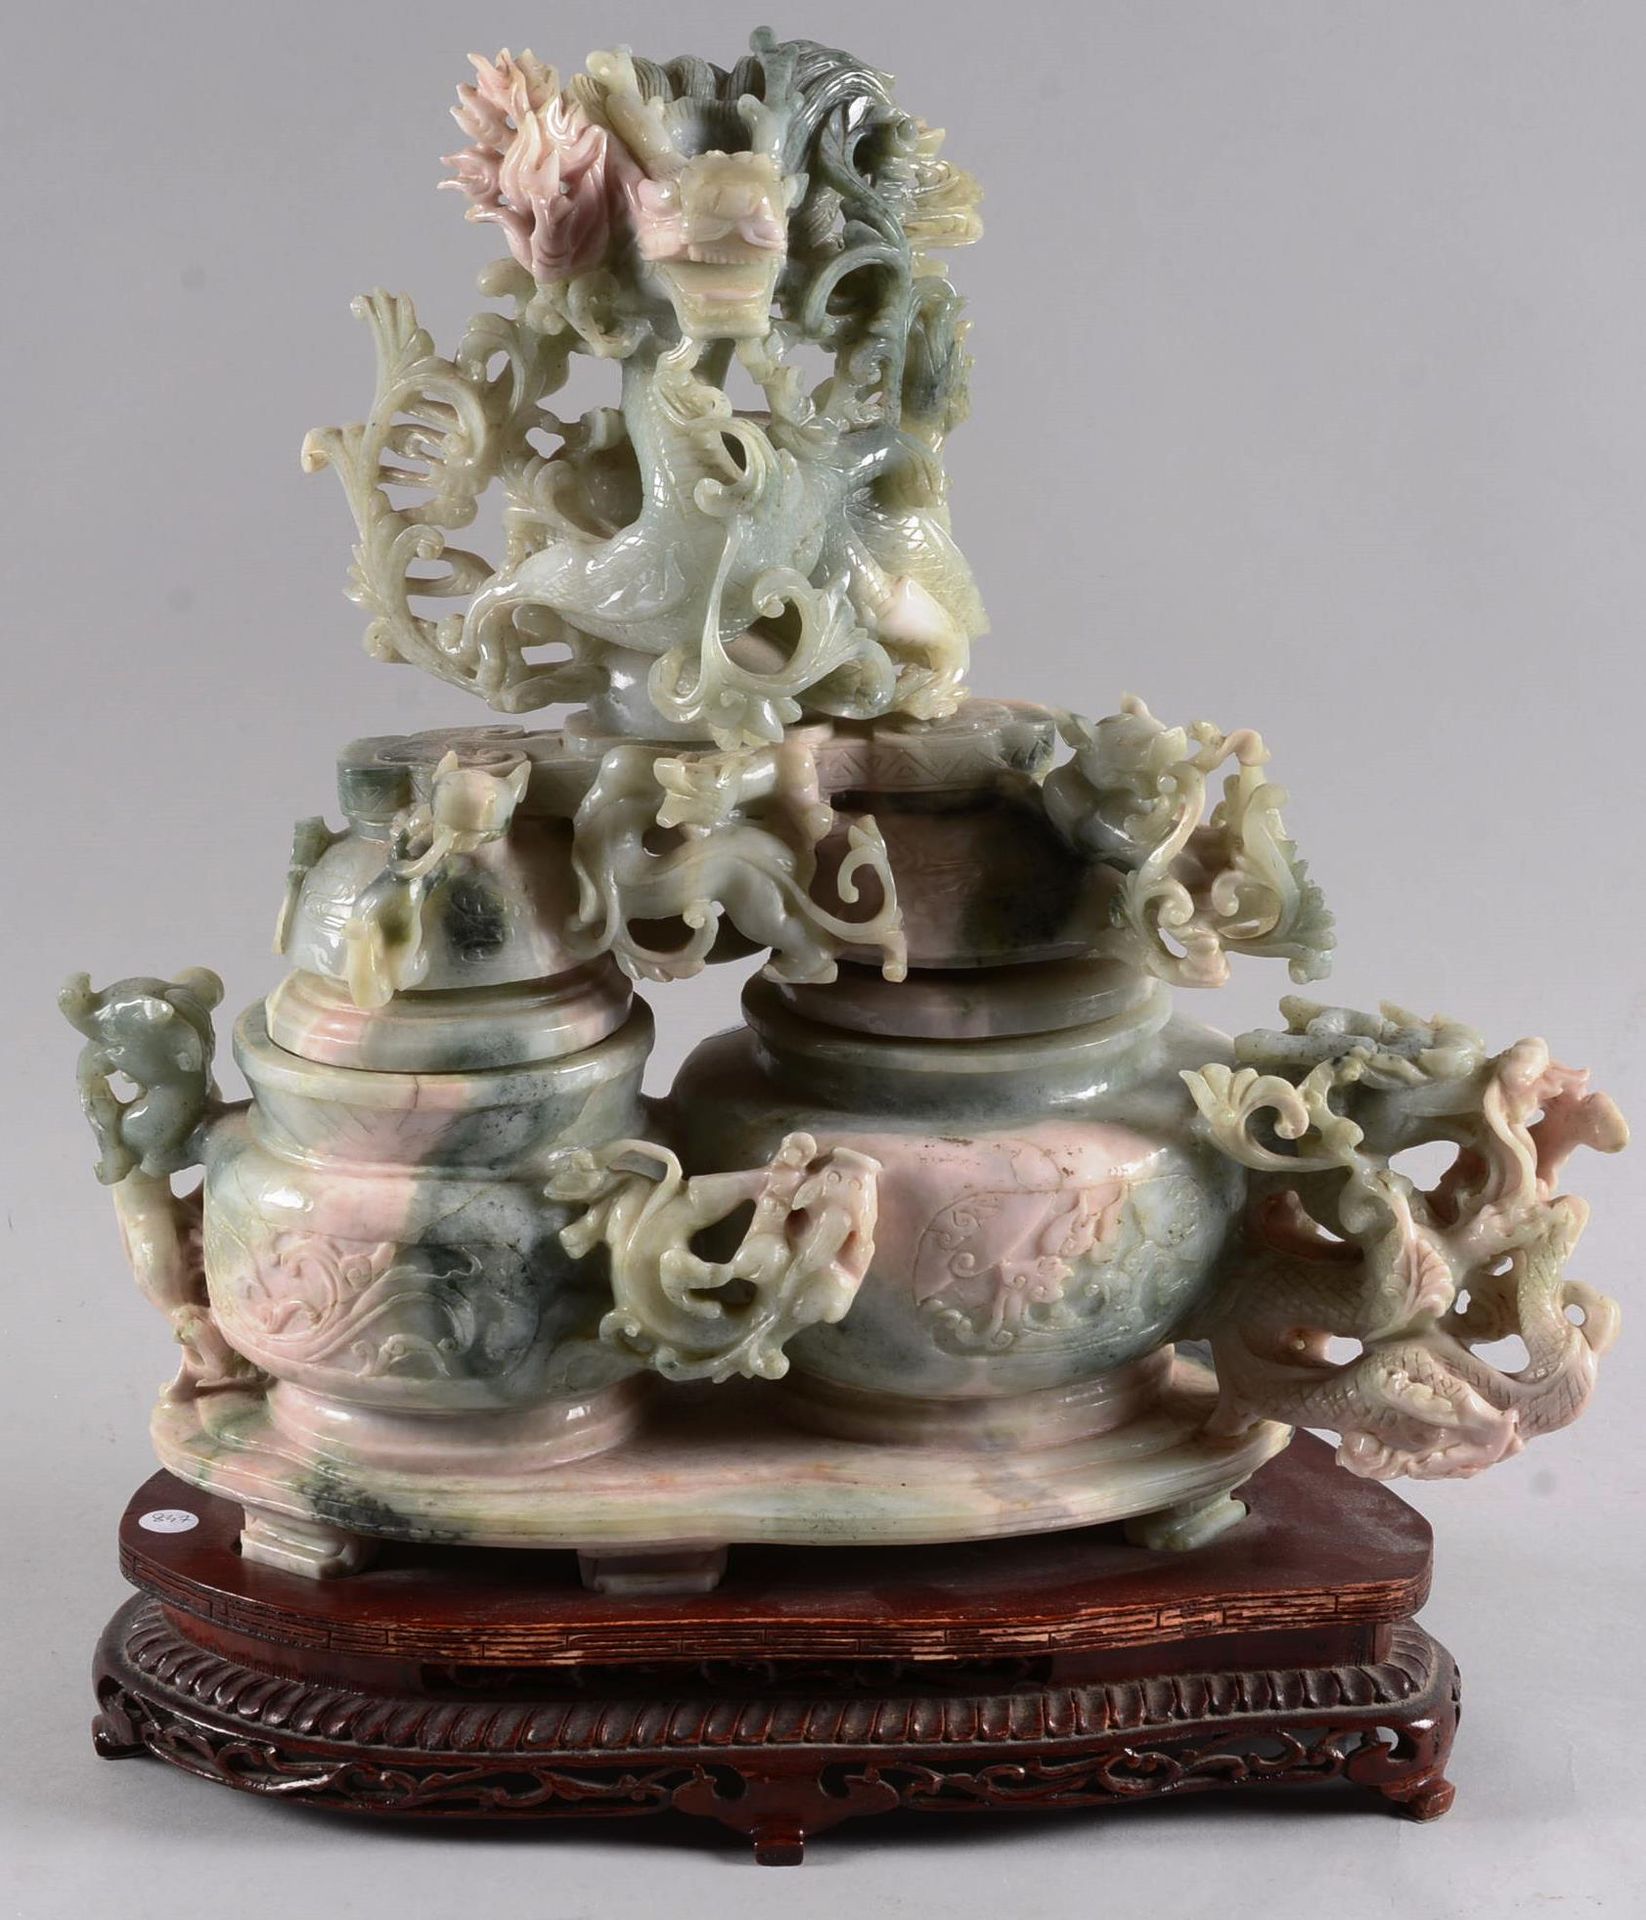 Belle et importante sculpture en jade CINA.

Bella e importante scultura di giad&hellip;